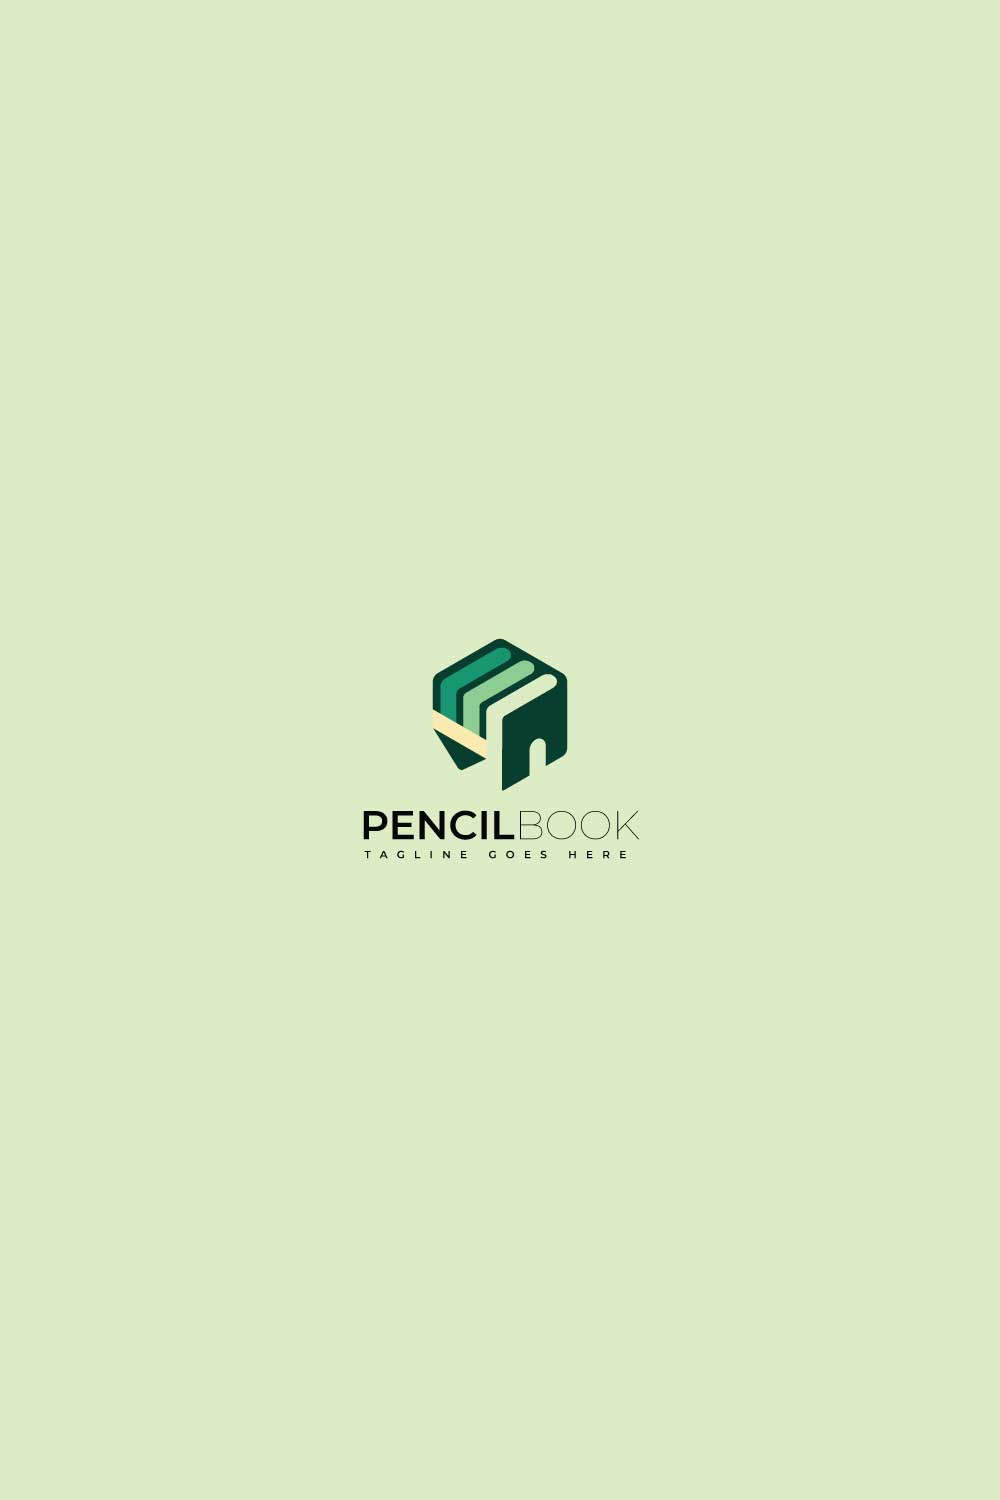 Hexagon Pencil Book Education Architecture Logo design pinterest preview image.